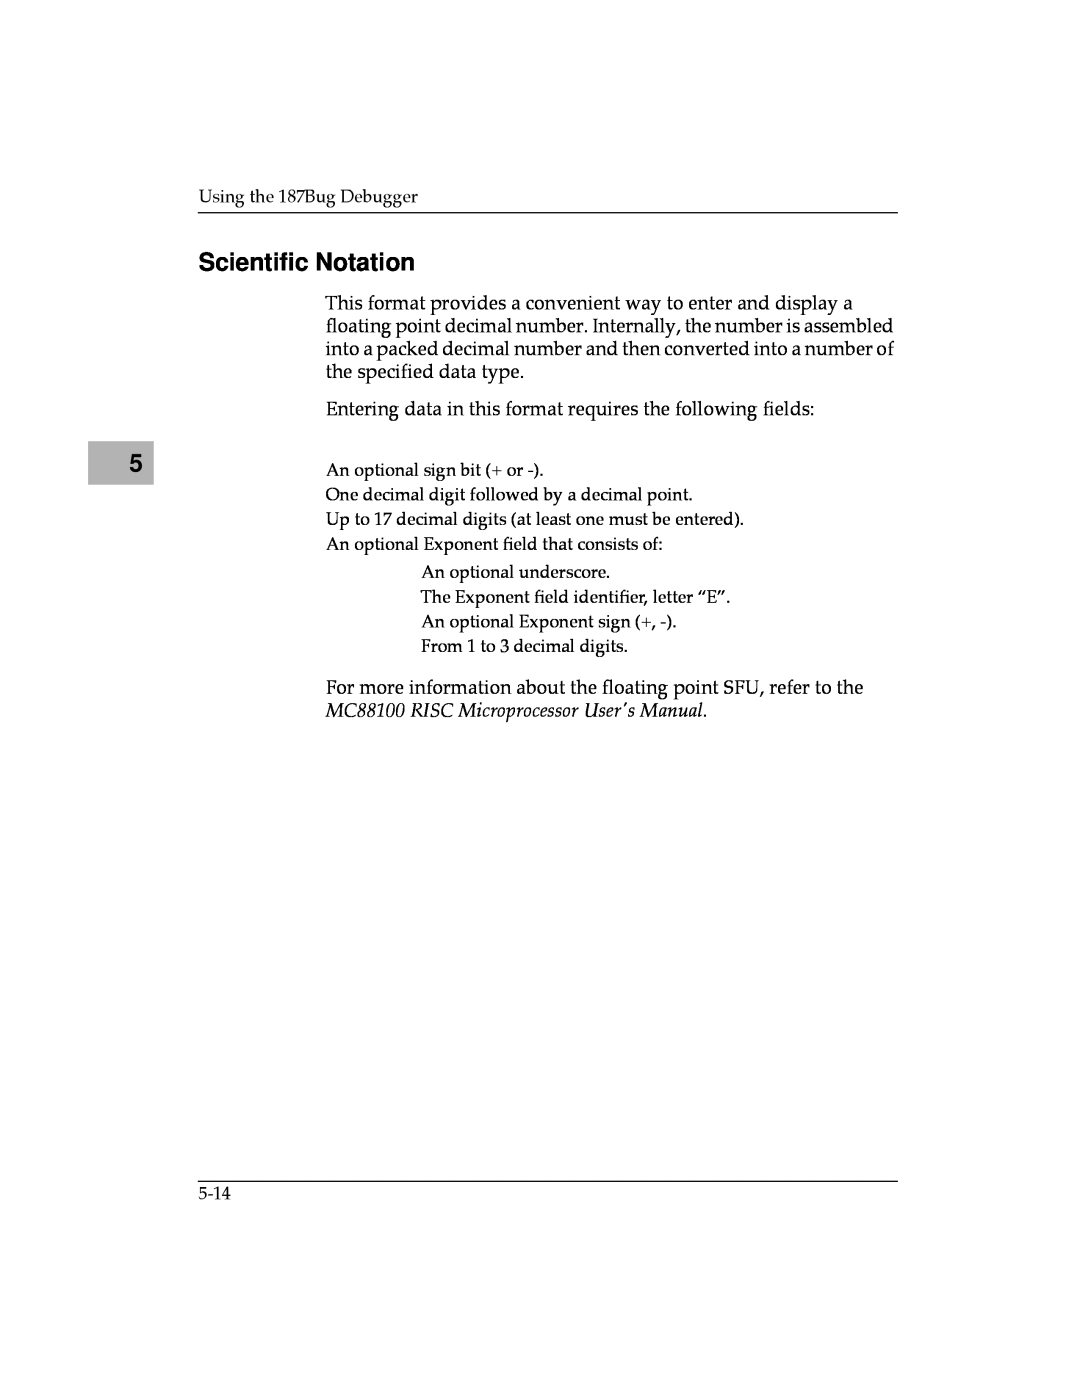 Motorola MVME187 manual Scientiﬁc Notation 